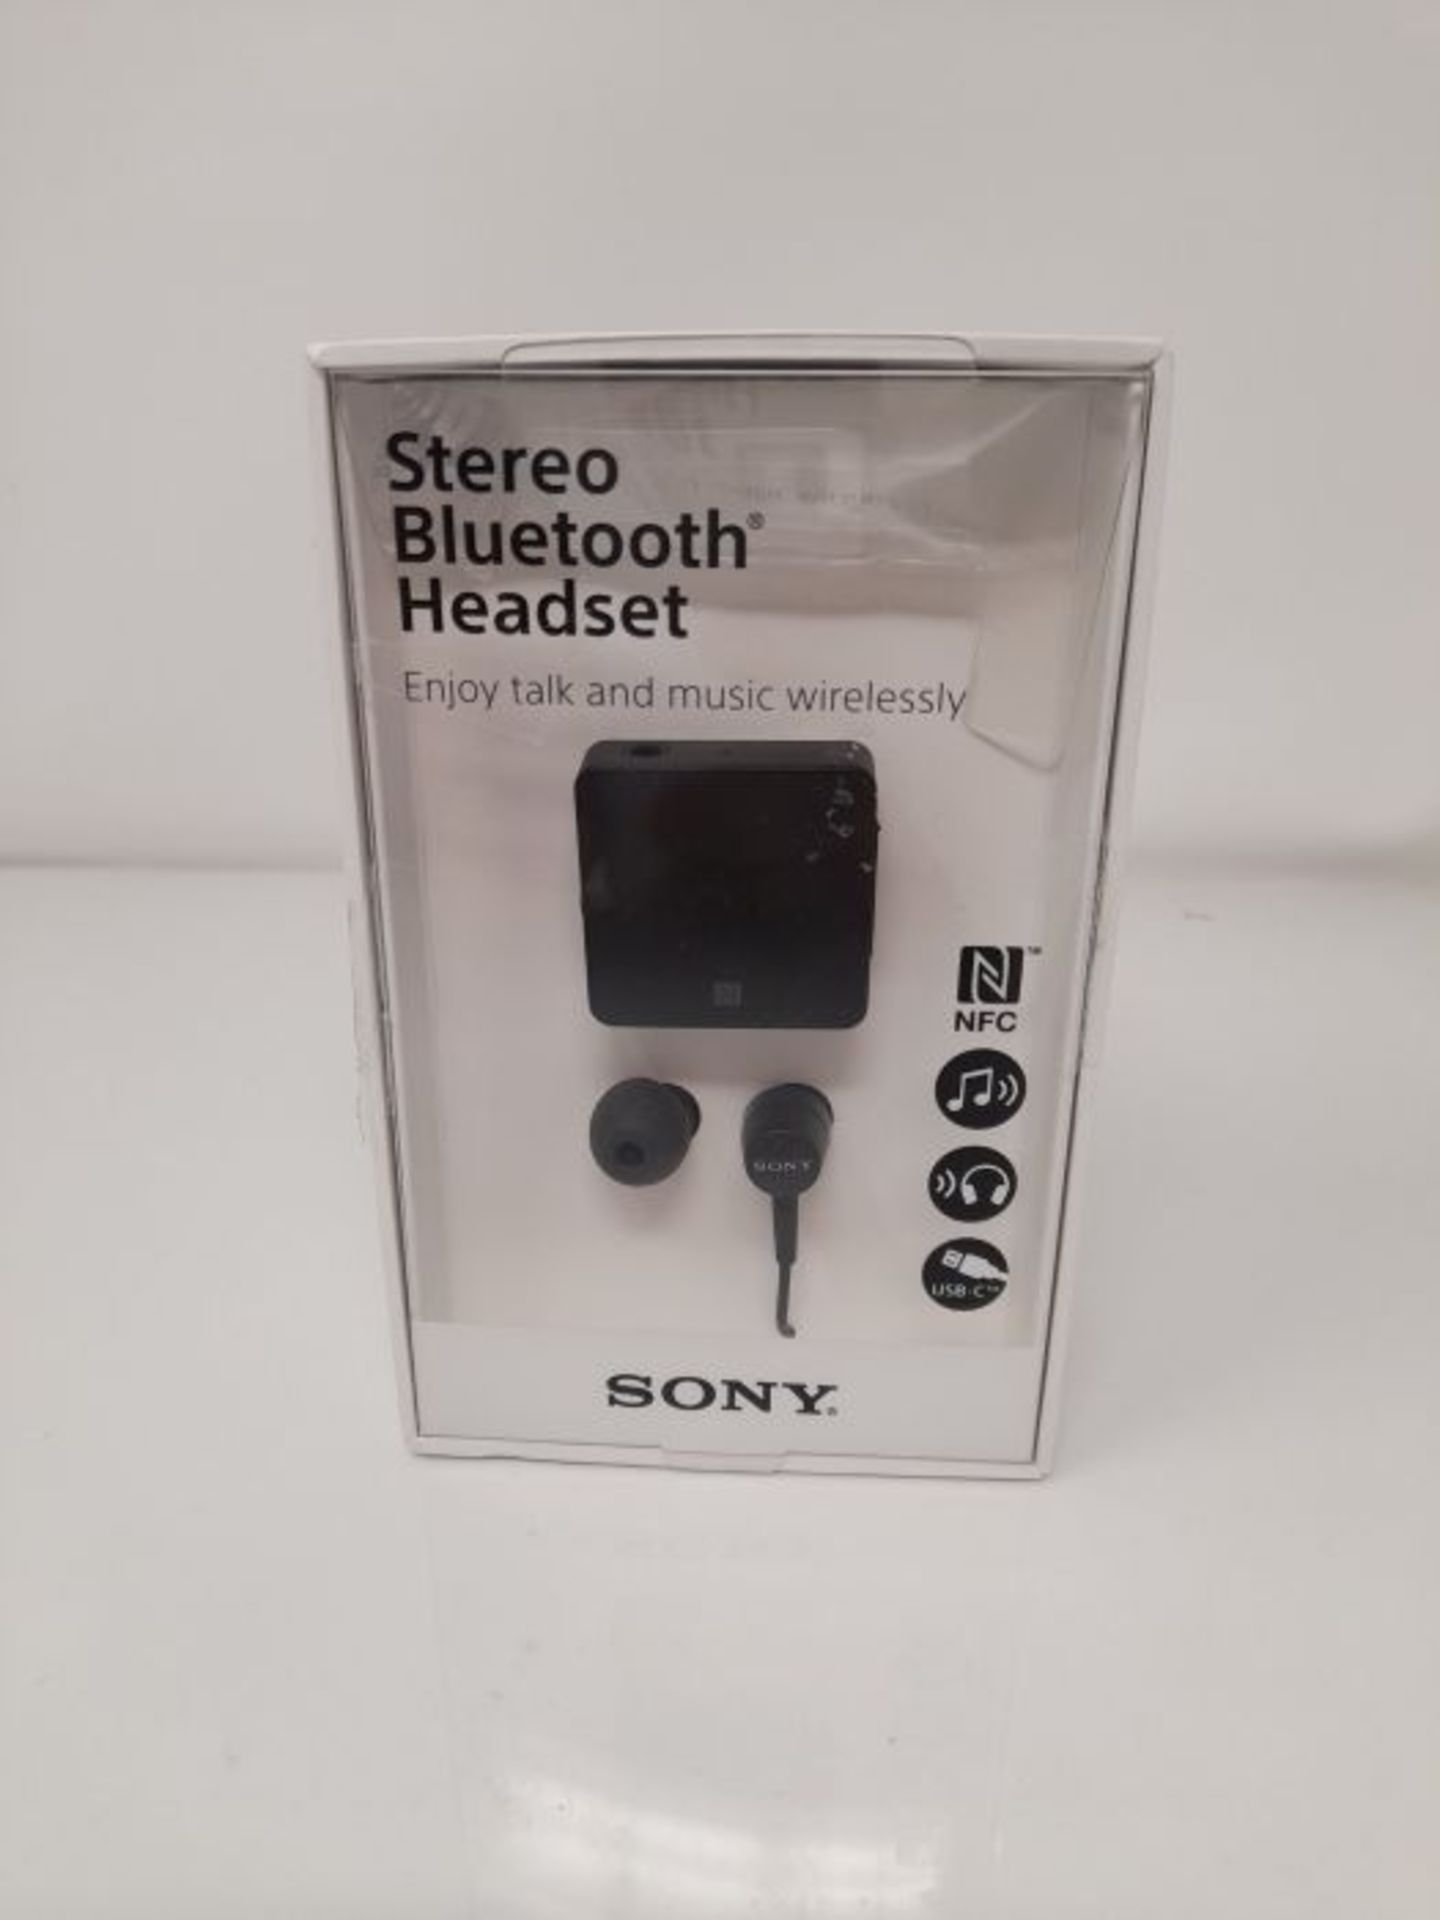 Sony SBH24 Stereo Bluetooth Headset - Black - Image 2 of 3